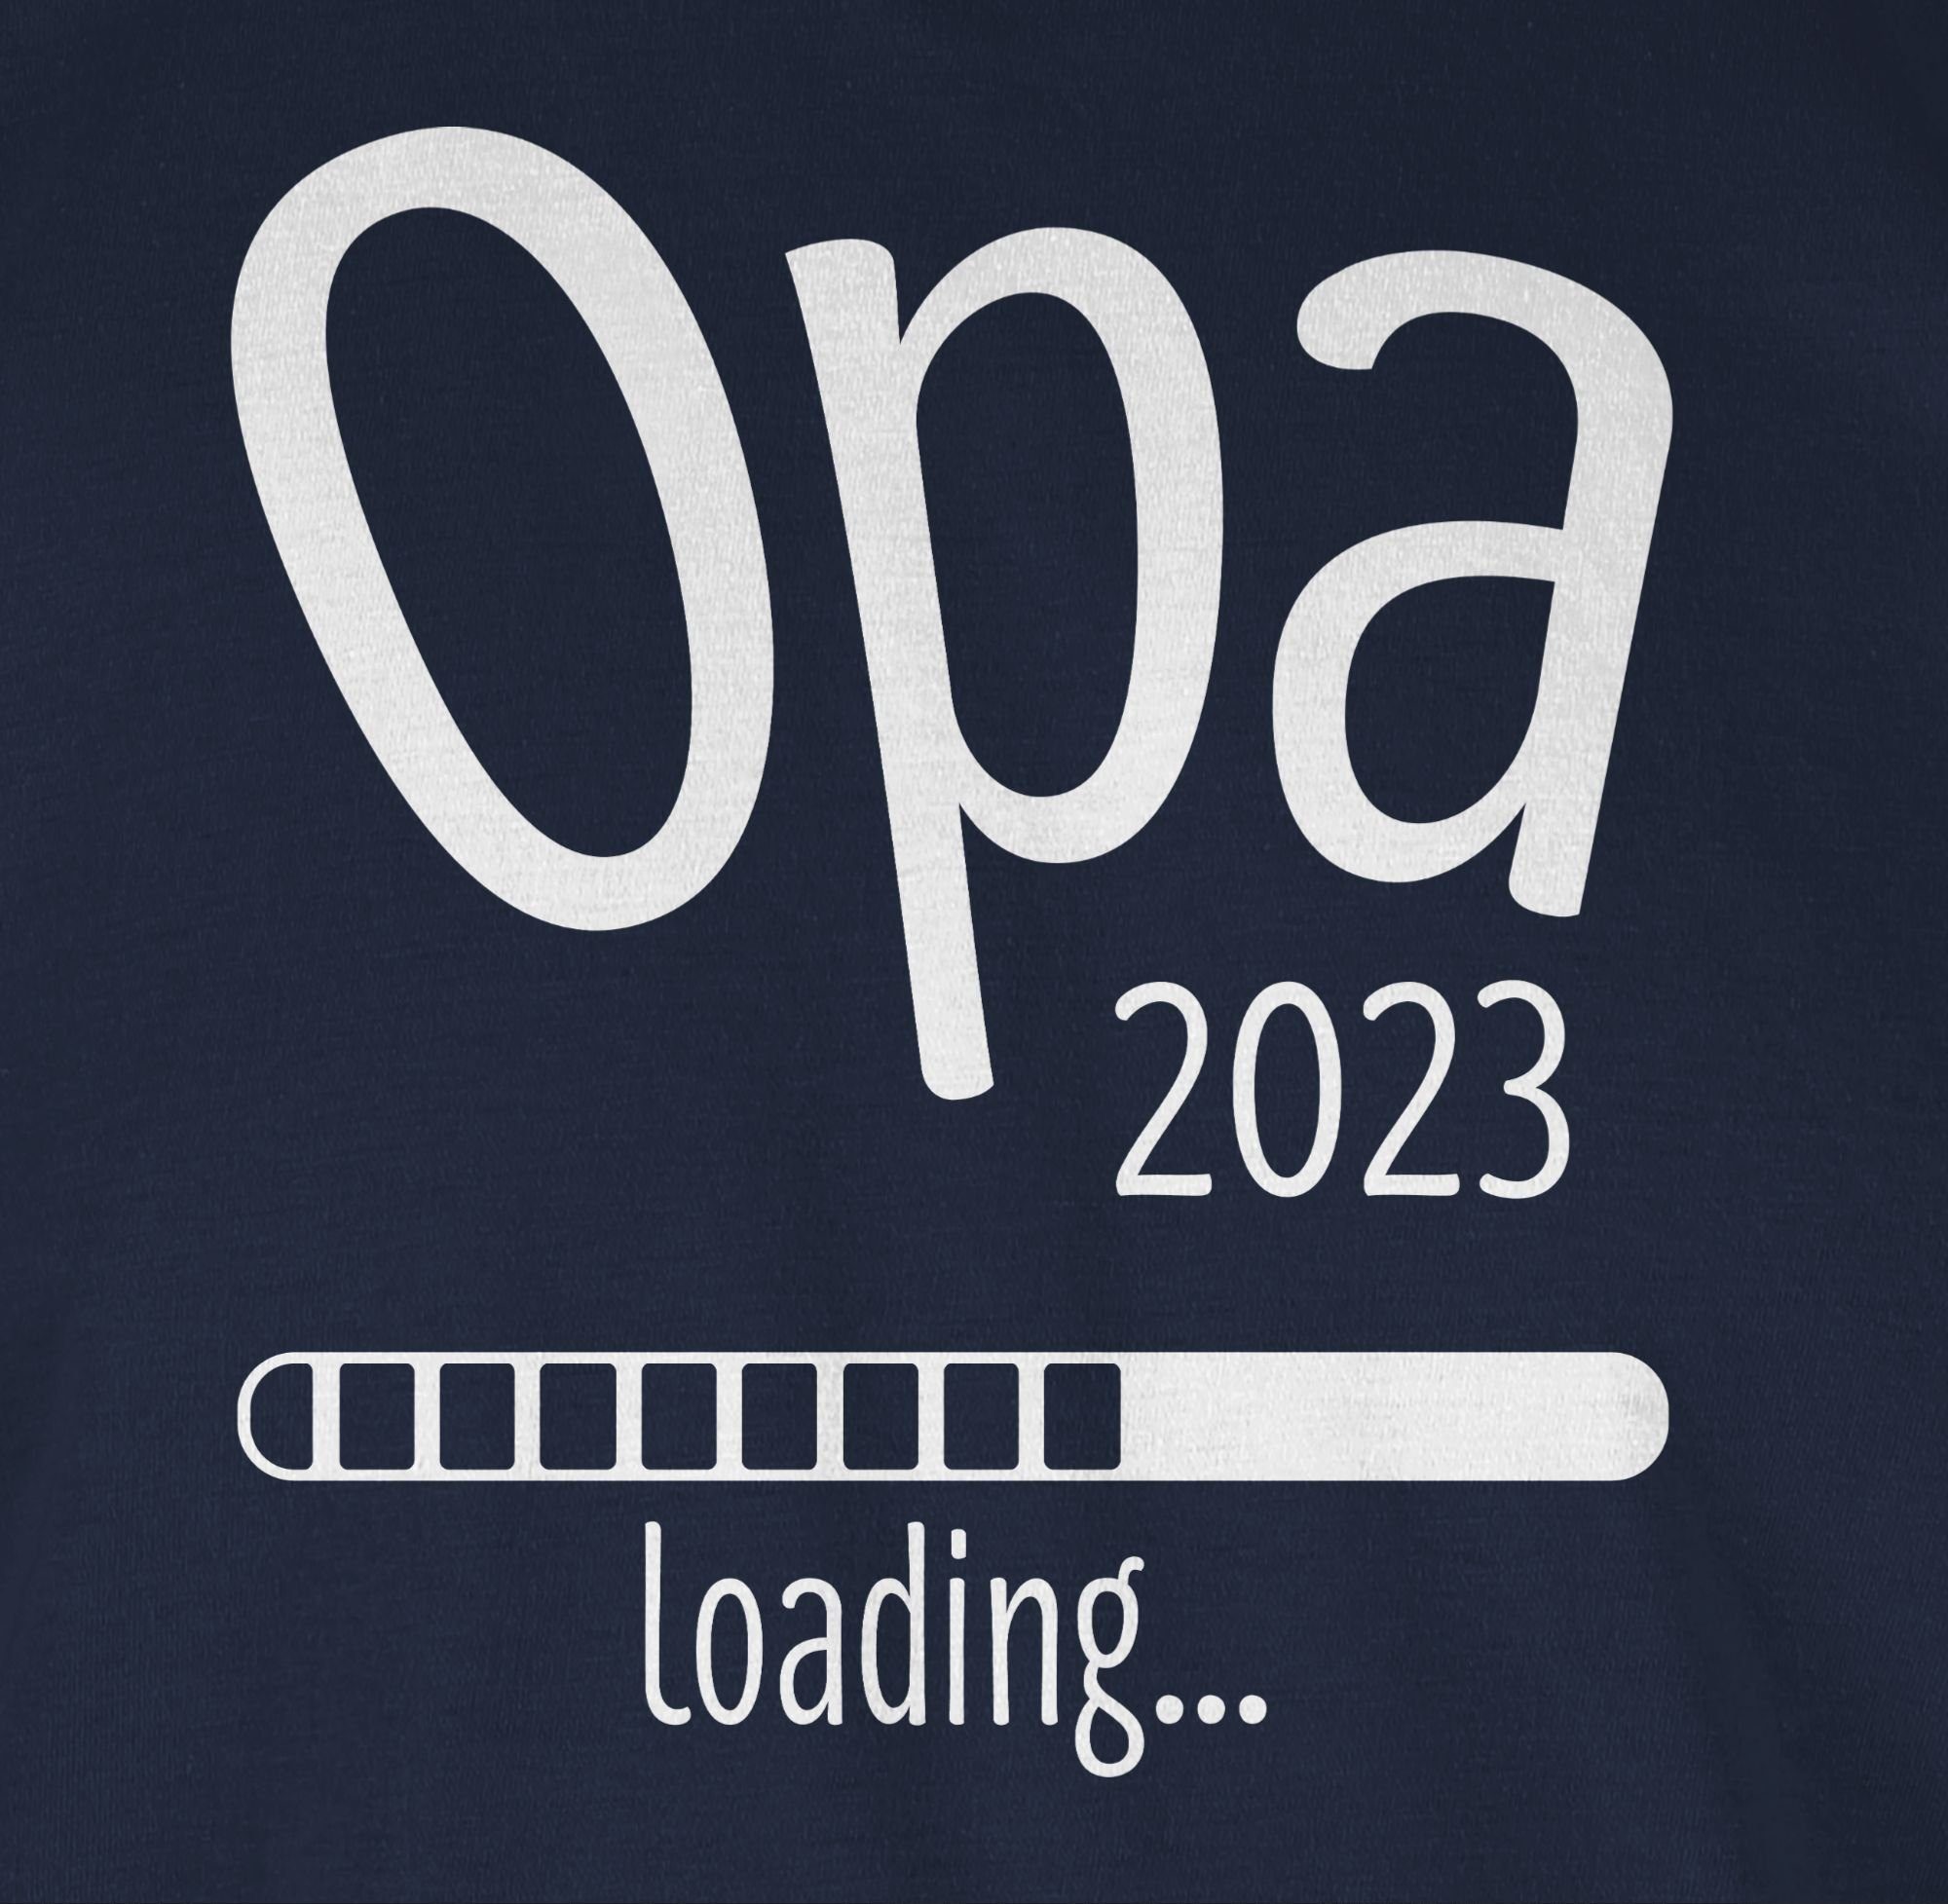 Shirtracer T-Shirt Opa Blau 2 Geschenke Navy loading 2023 Opa